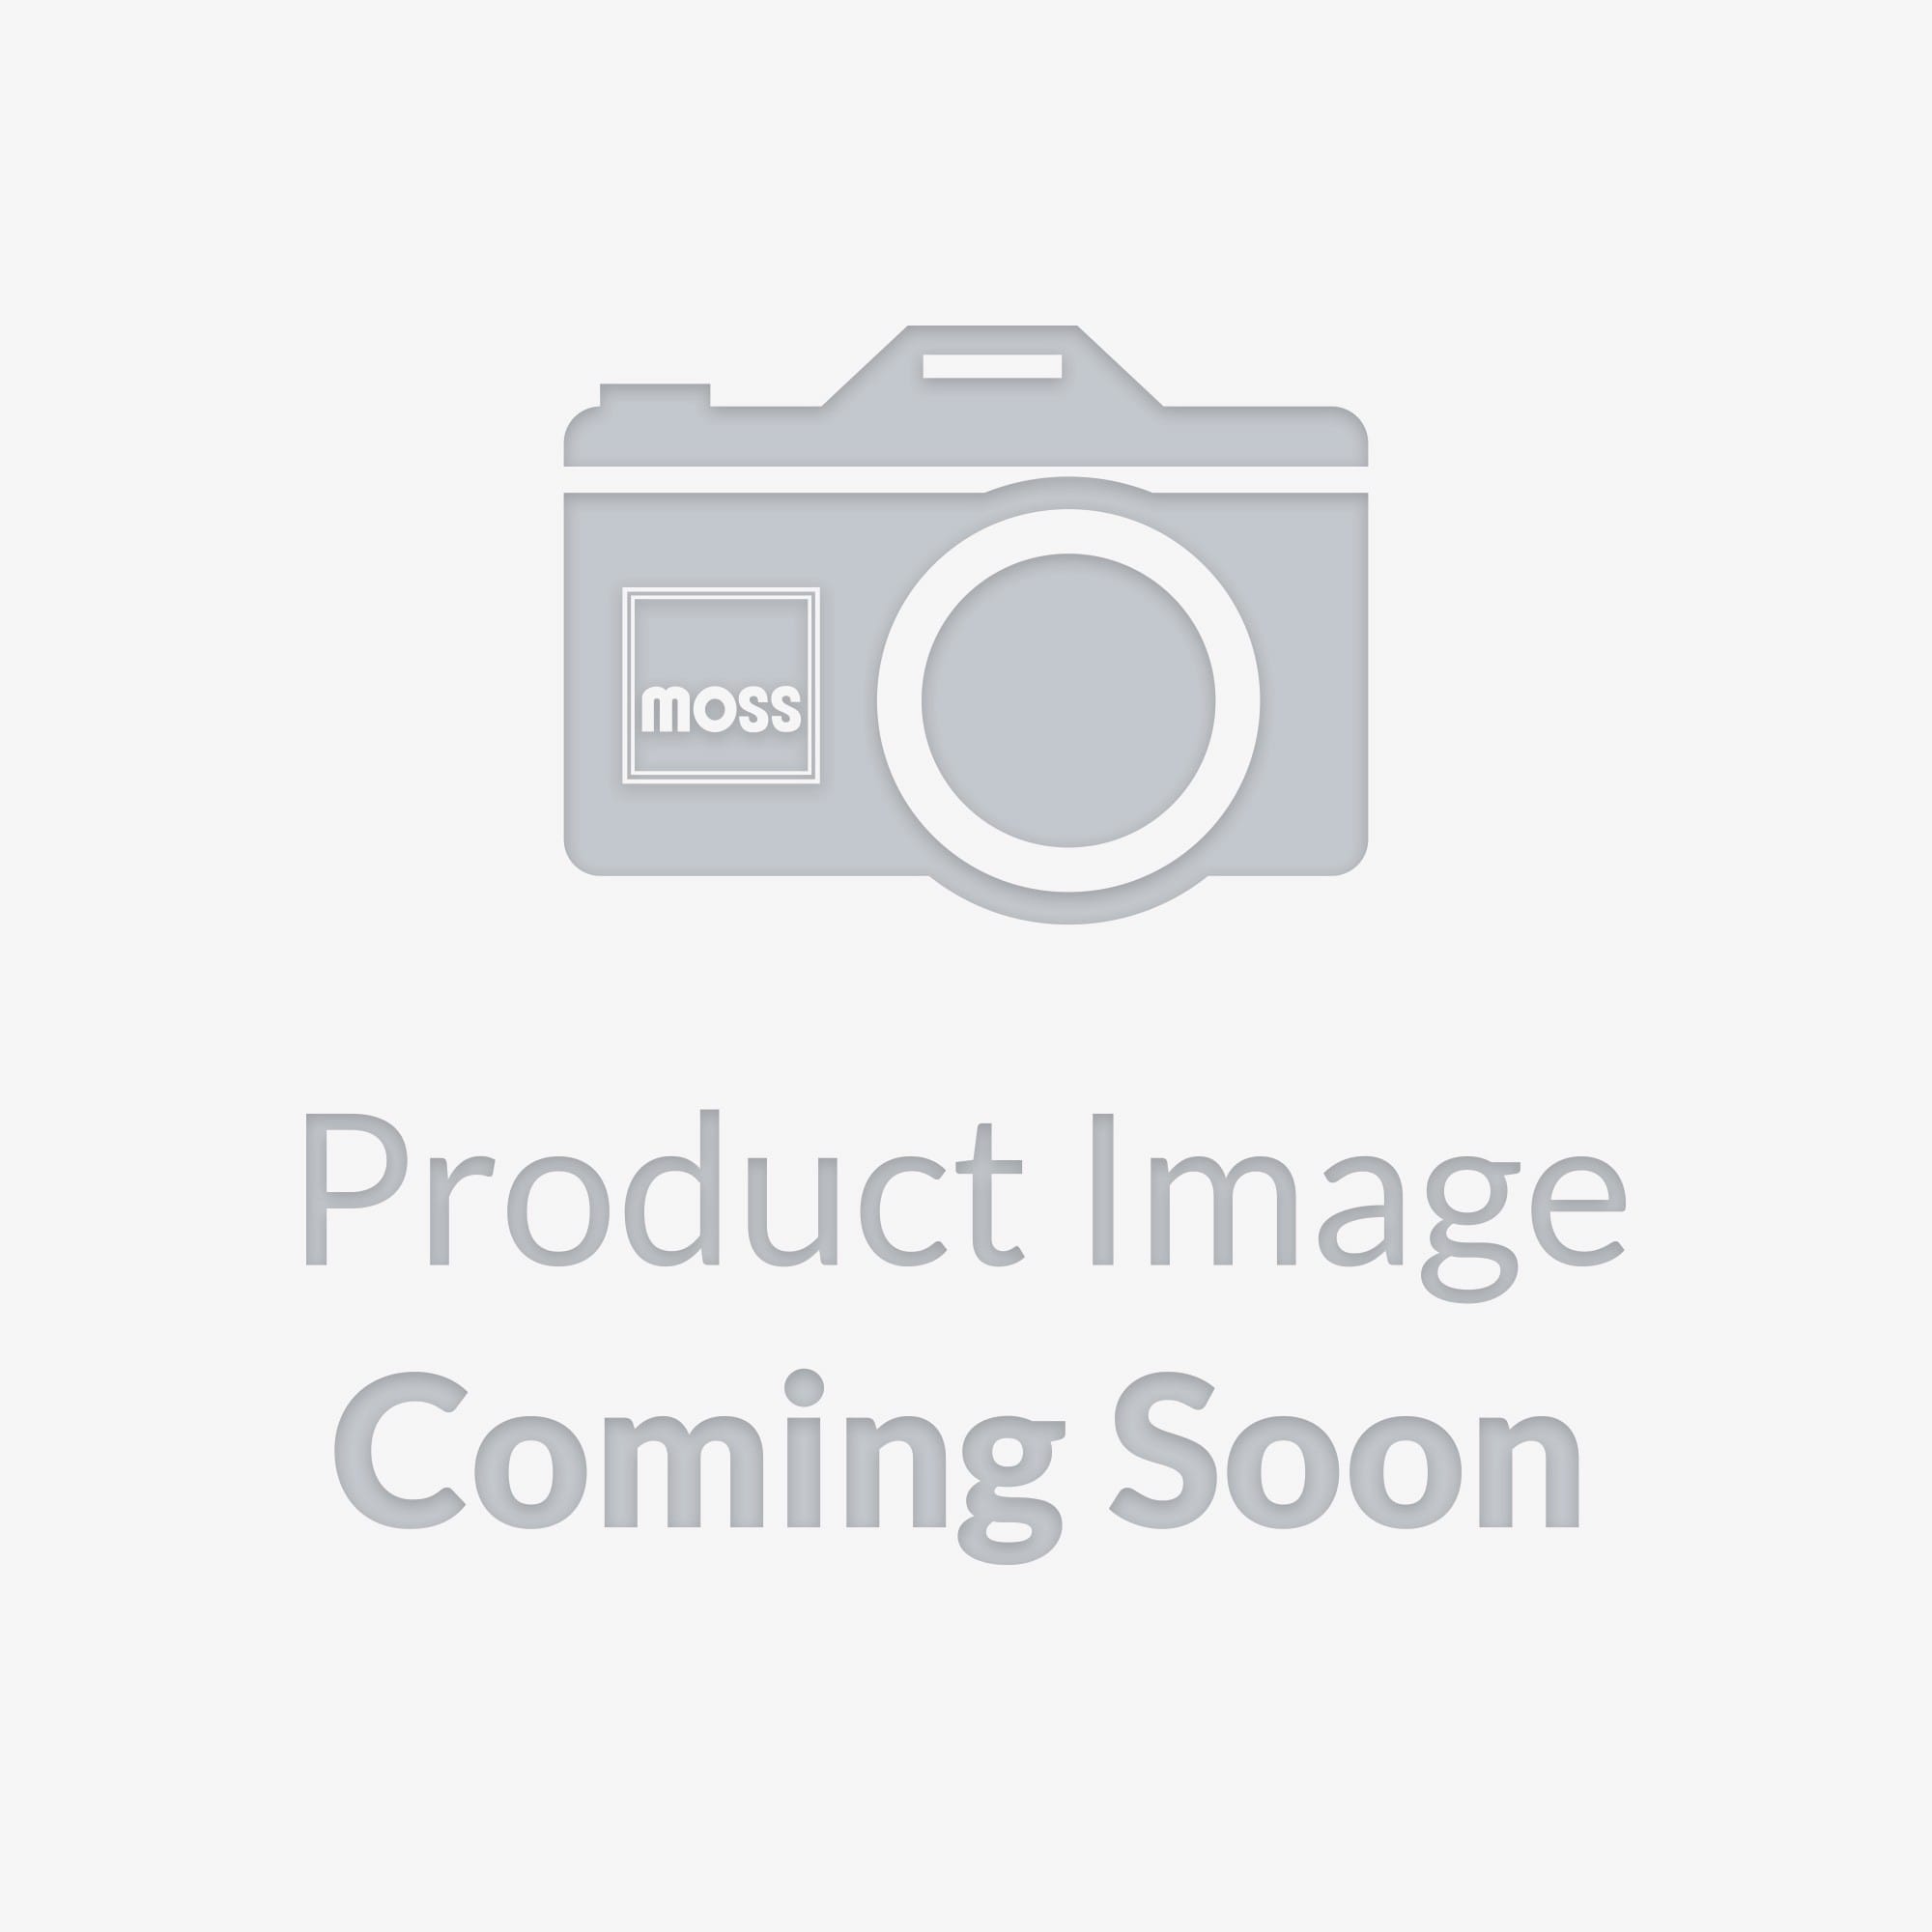 900-072 Dual Strut Hood Lift Kit | Moss Motors